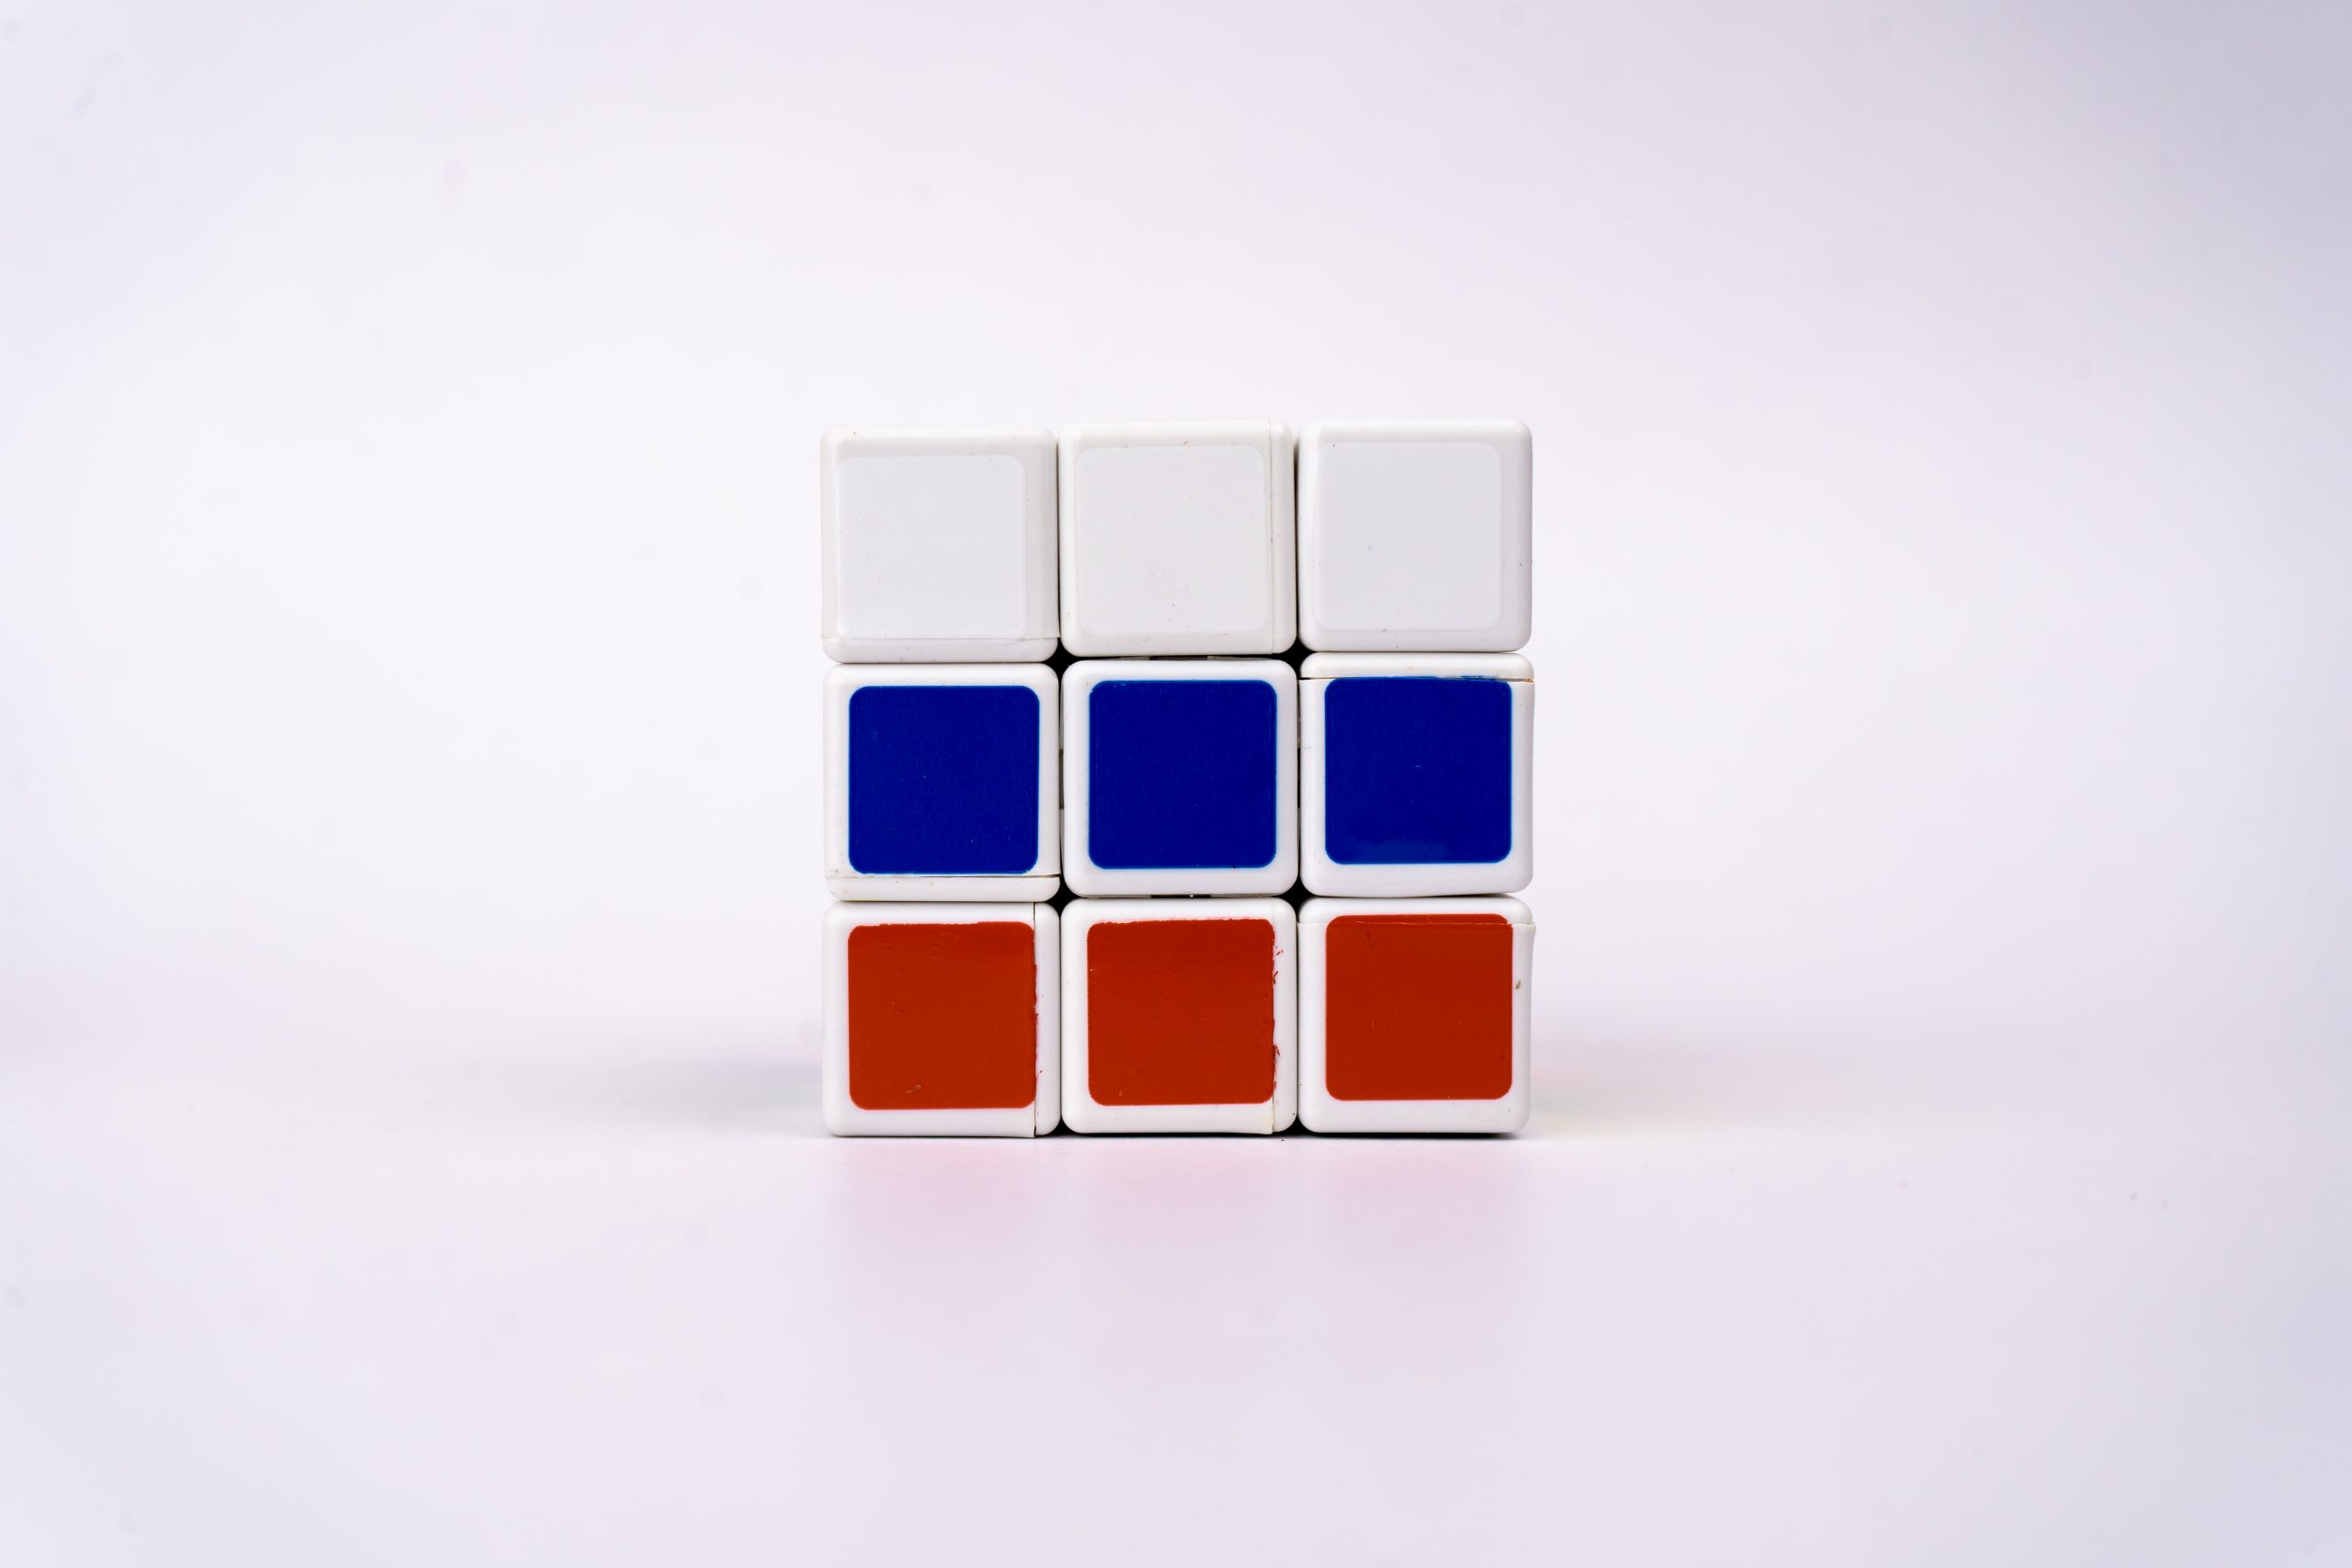 Russian Flag on Rubik Cube